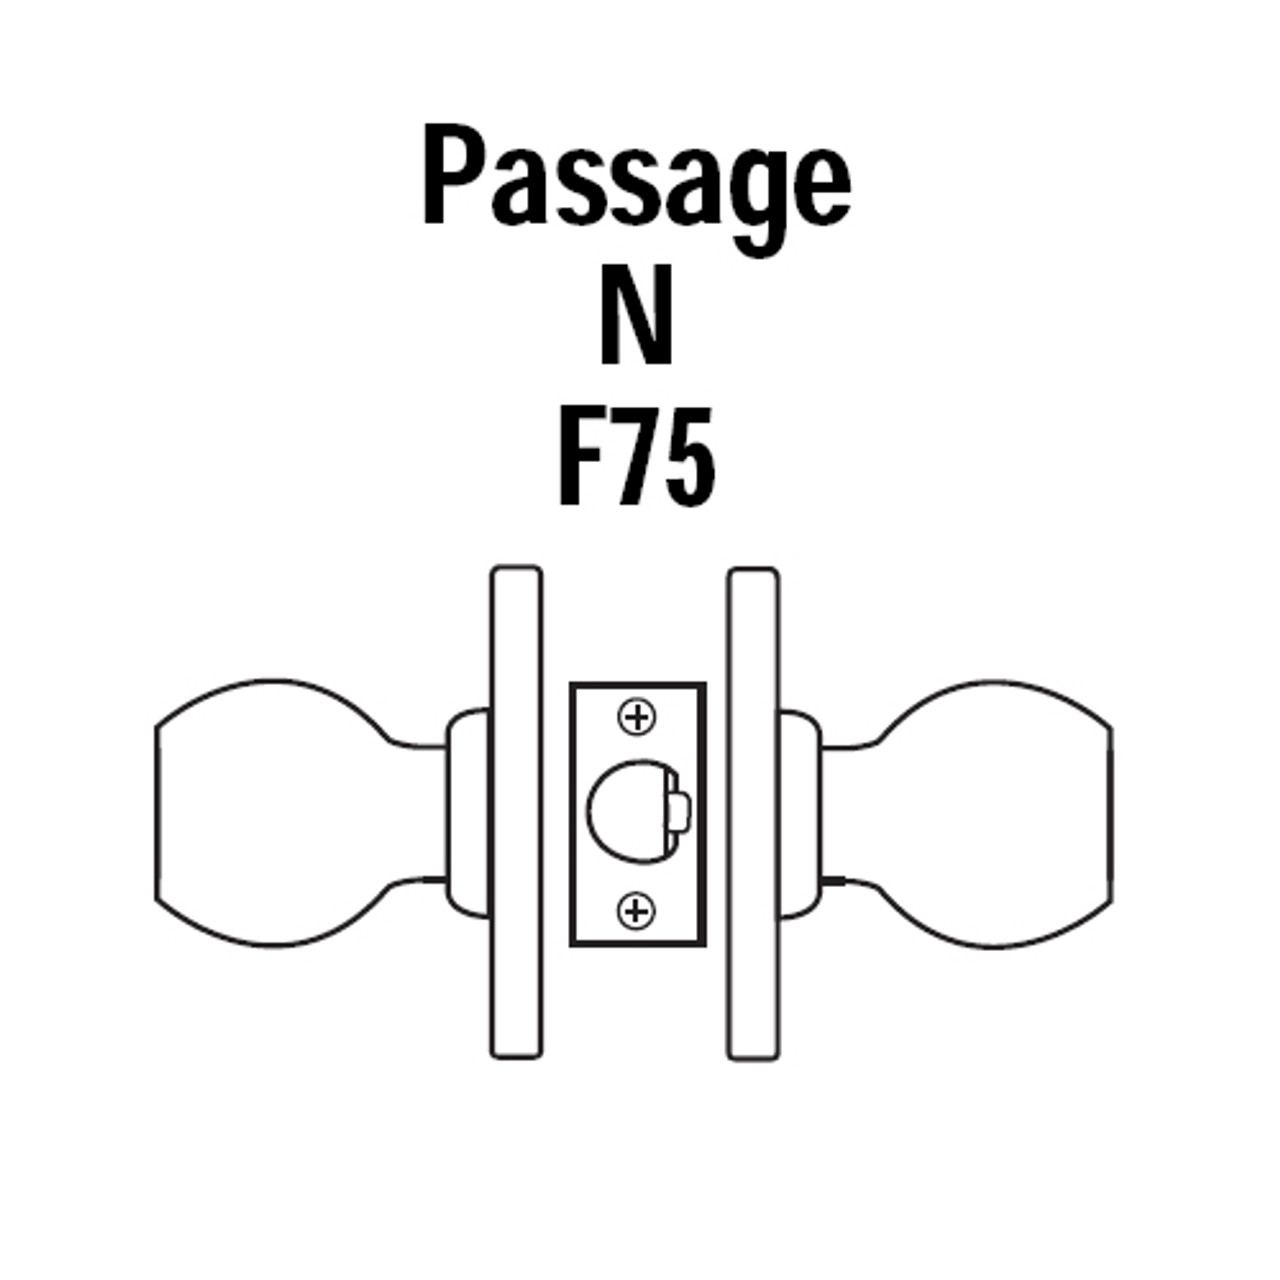 8K30N4DSTK625 Best 8K Series Passage Heavy Duty Cylindrical Knob Locks with Round Style in Bright Chrome